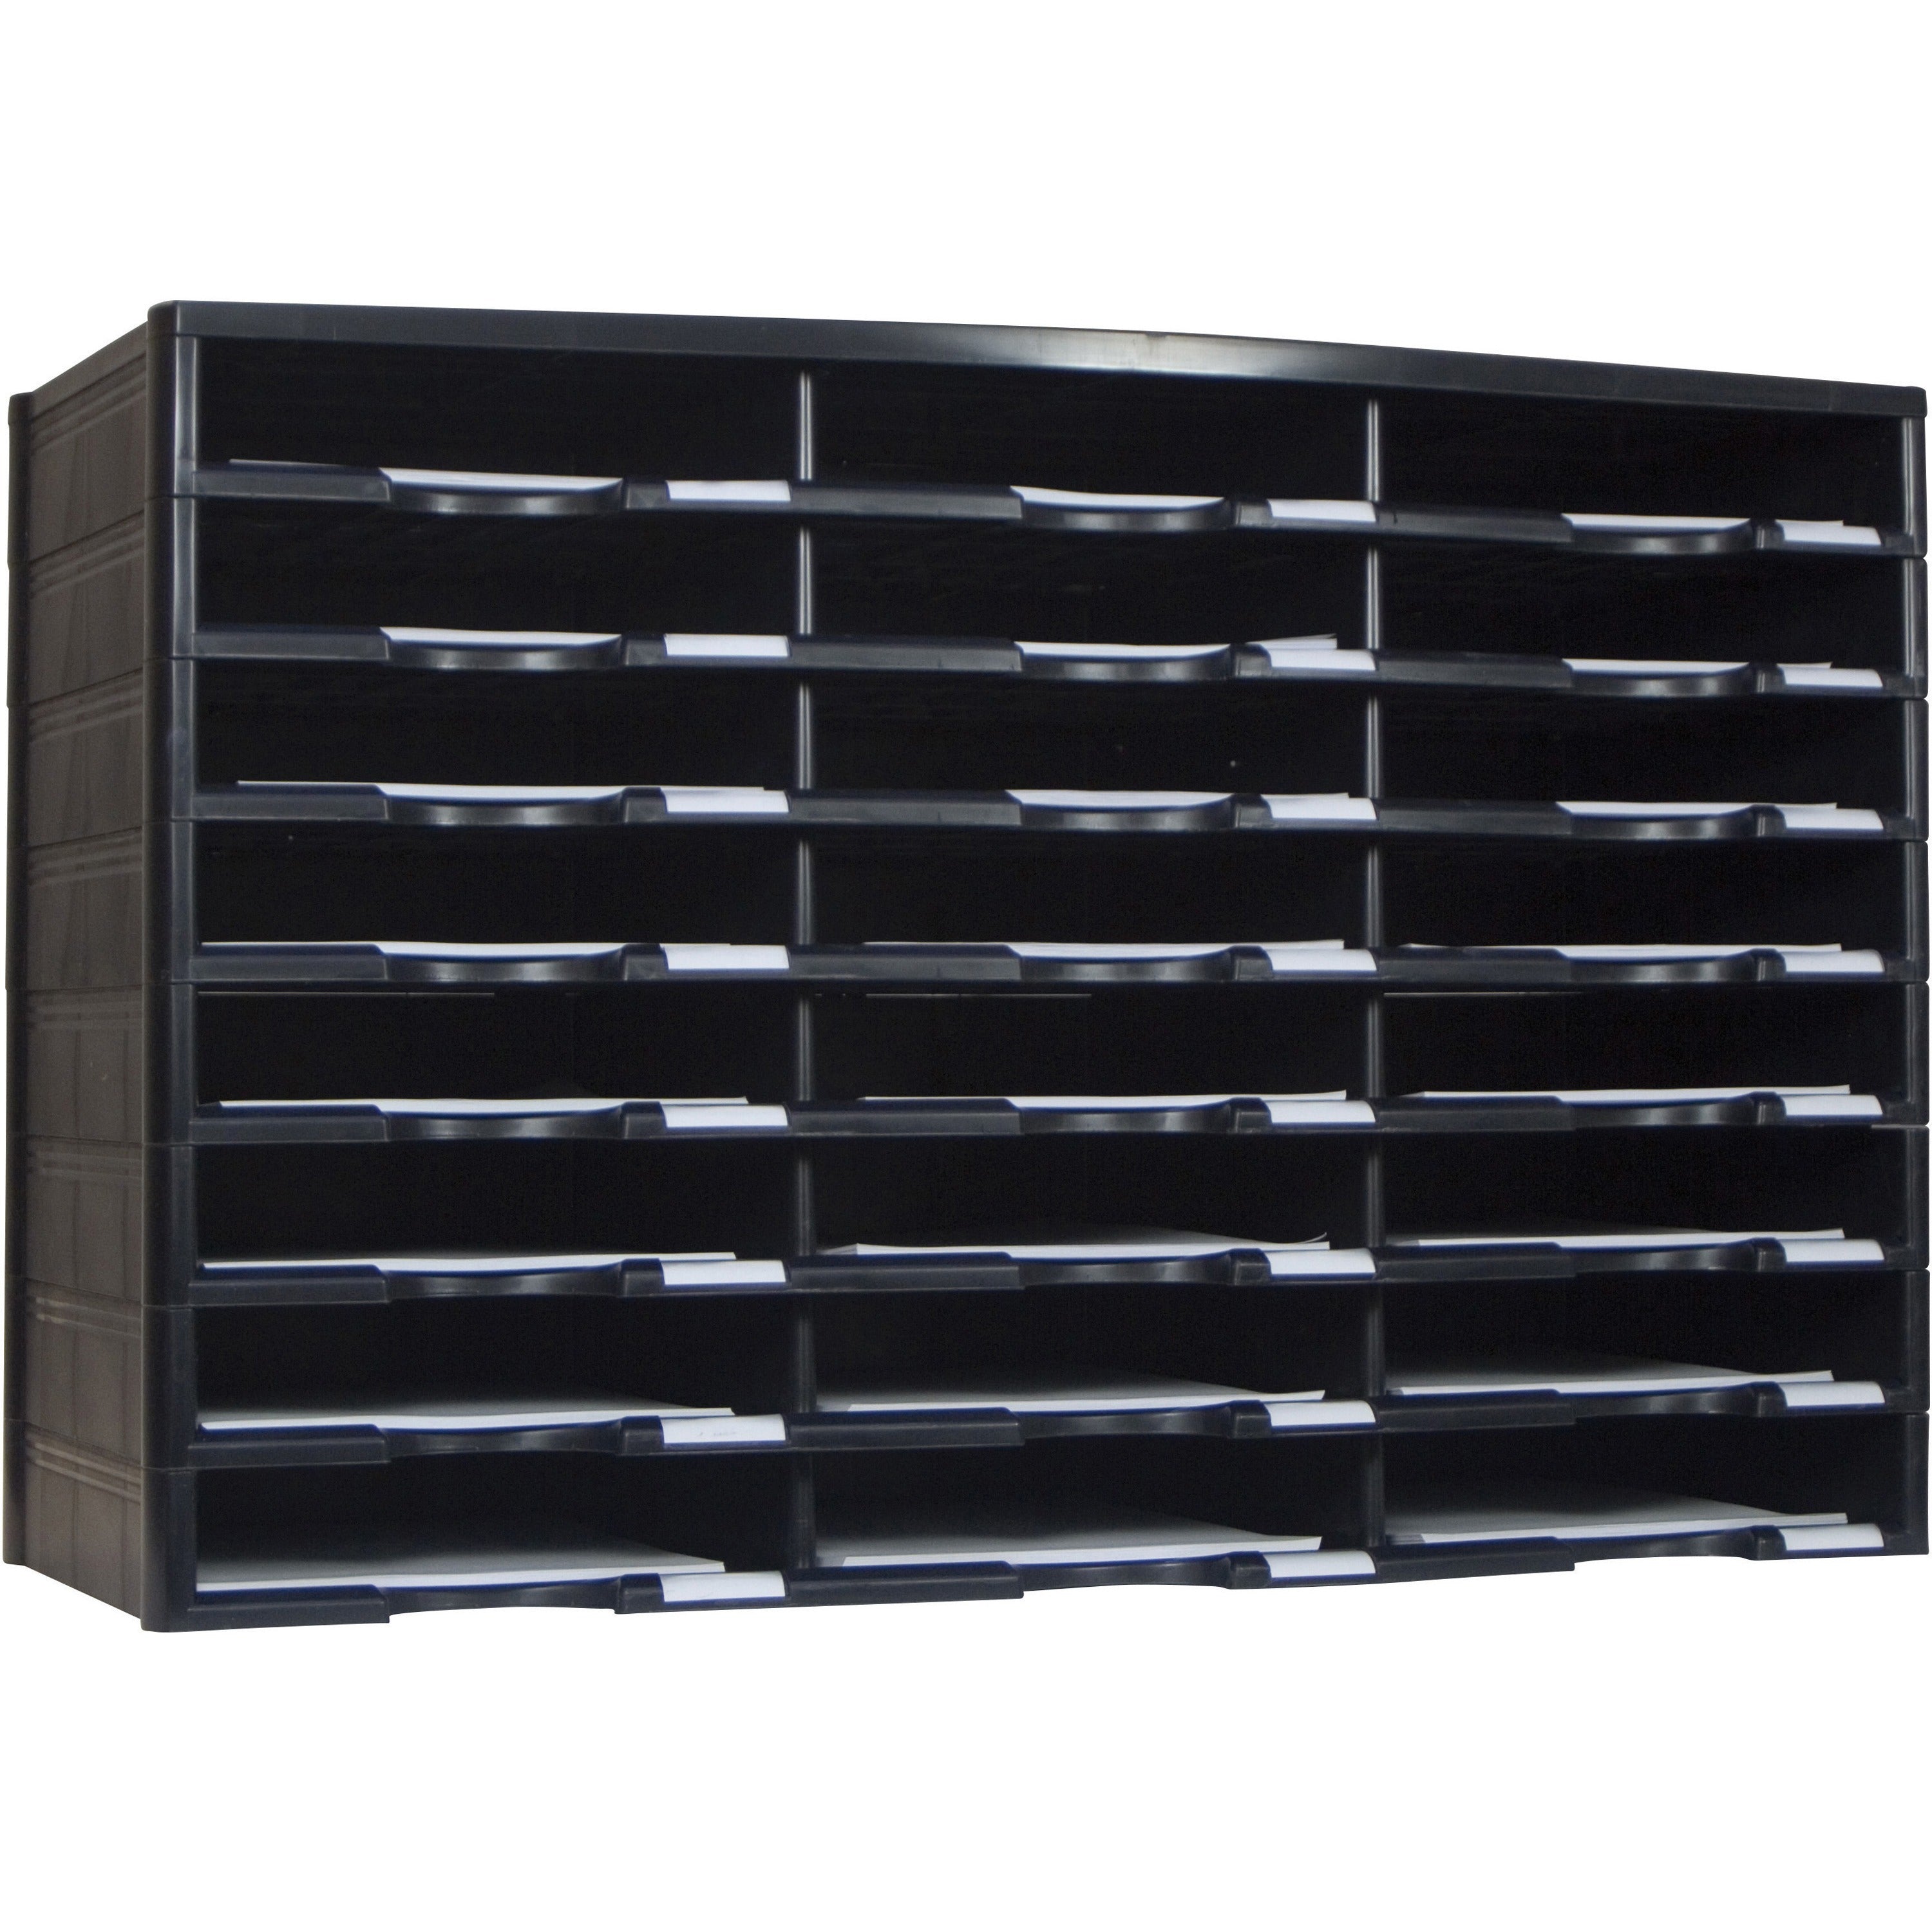 storex-stackable-literature-sorter-12000-x-sheet-24-compartments-950-x-12-205-height-x-141-width314-length-black-plastic-polystyrene-1-each_stx61435u01c - 1